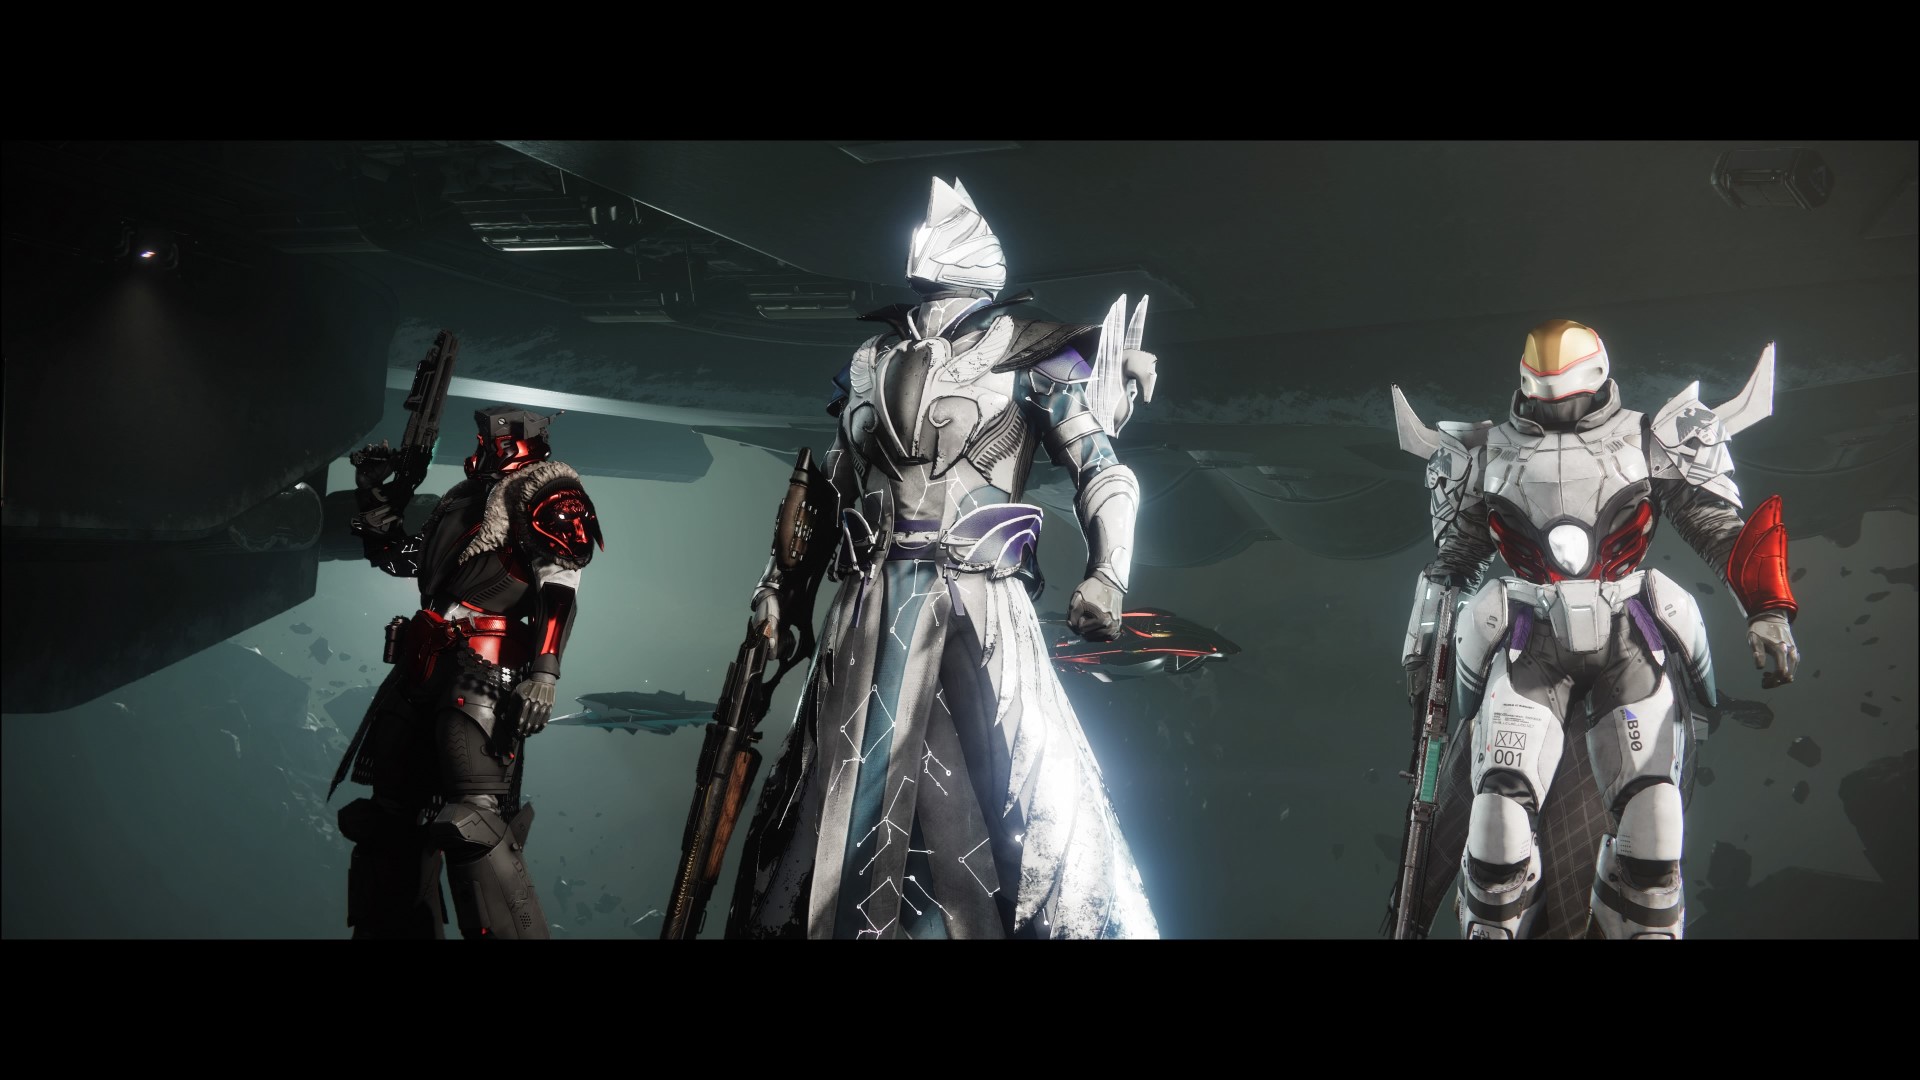 A fireteam of three Guardians entering an abandoned ship